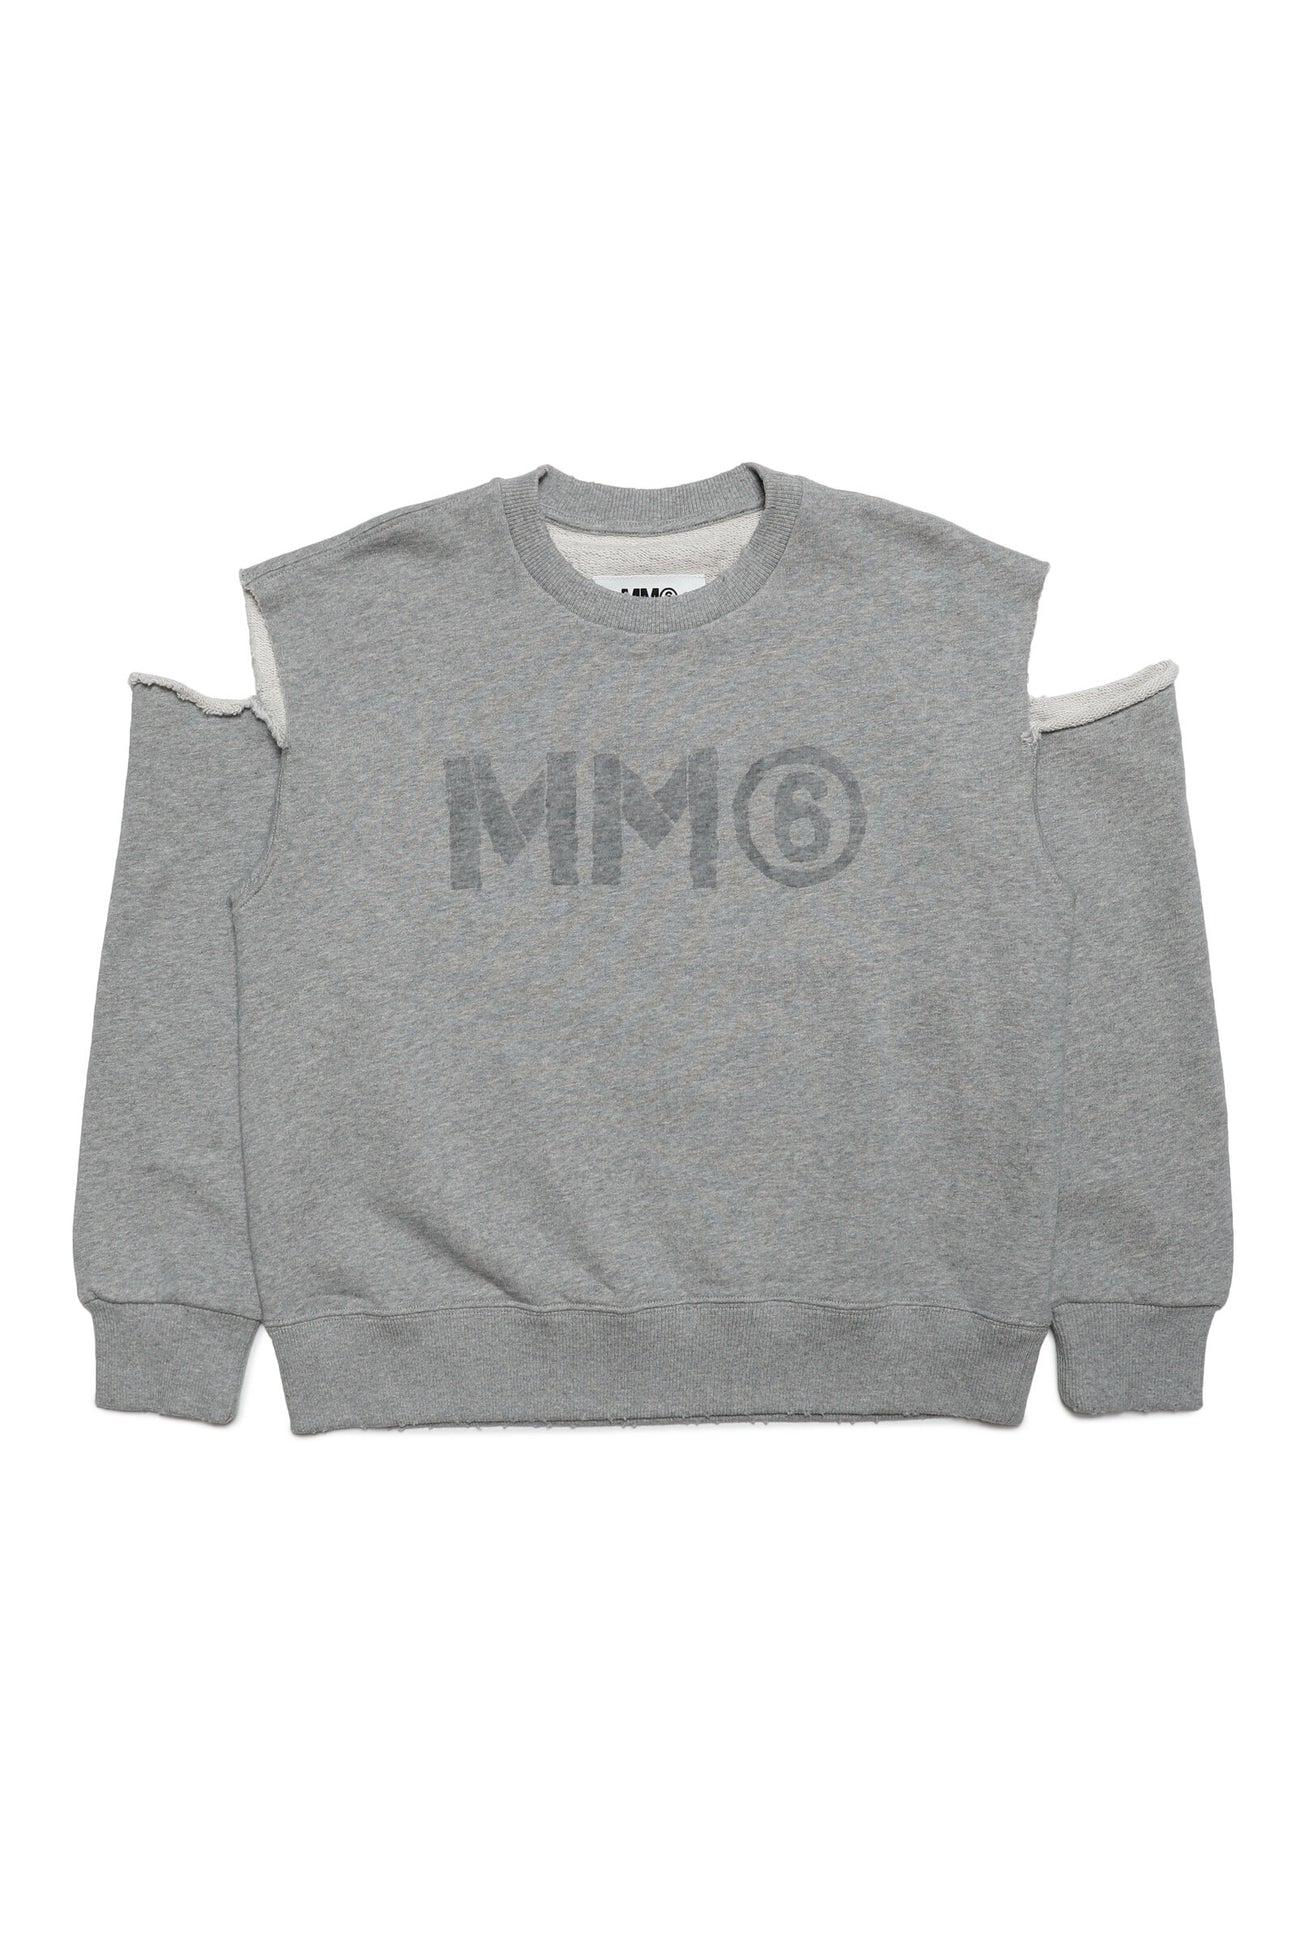 MM6 teen's cotton cut-out crew-neck sweatshirt | BRAVE KID